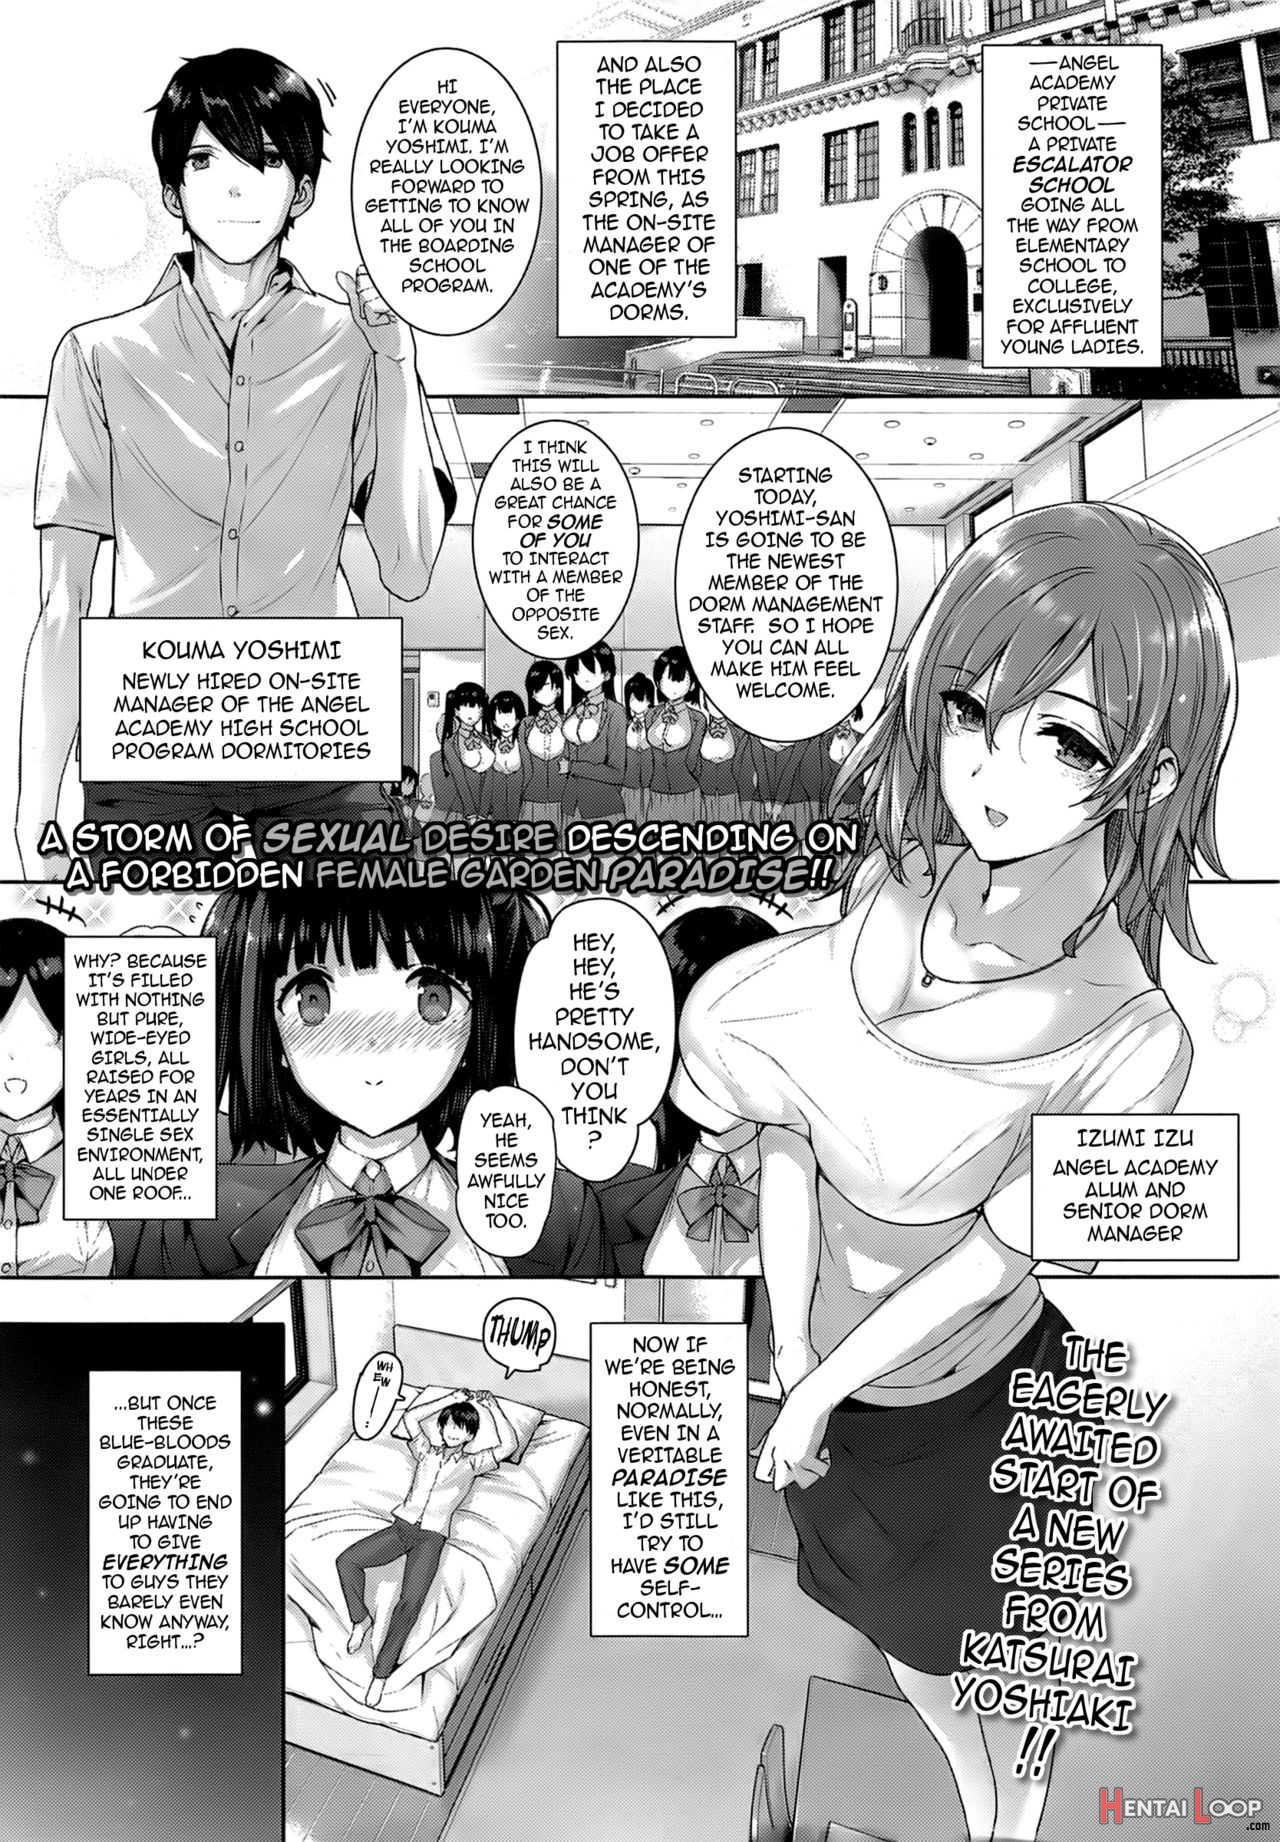 Angel Academy's Hardcore Dorm Sex Life 19 page 2